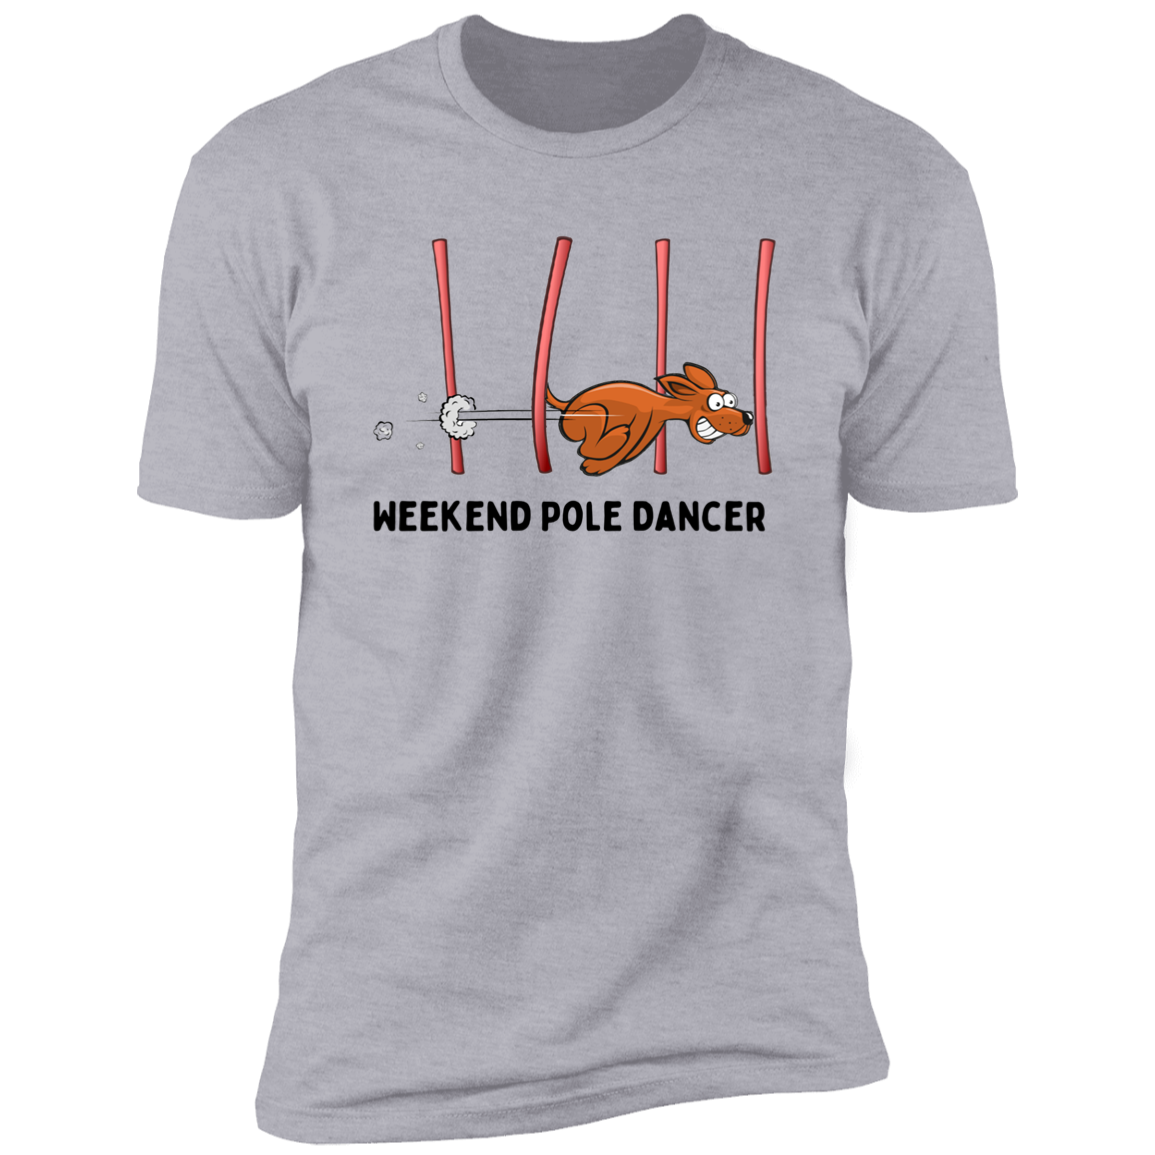 Weekend Pole Dancer Dog Agility T-Shirt, dog shirt for humans, sporting dog shirt, agility dog shirt, in light heather gray